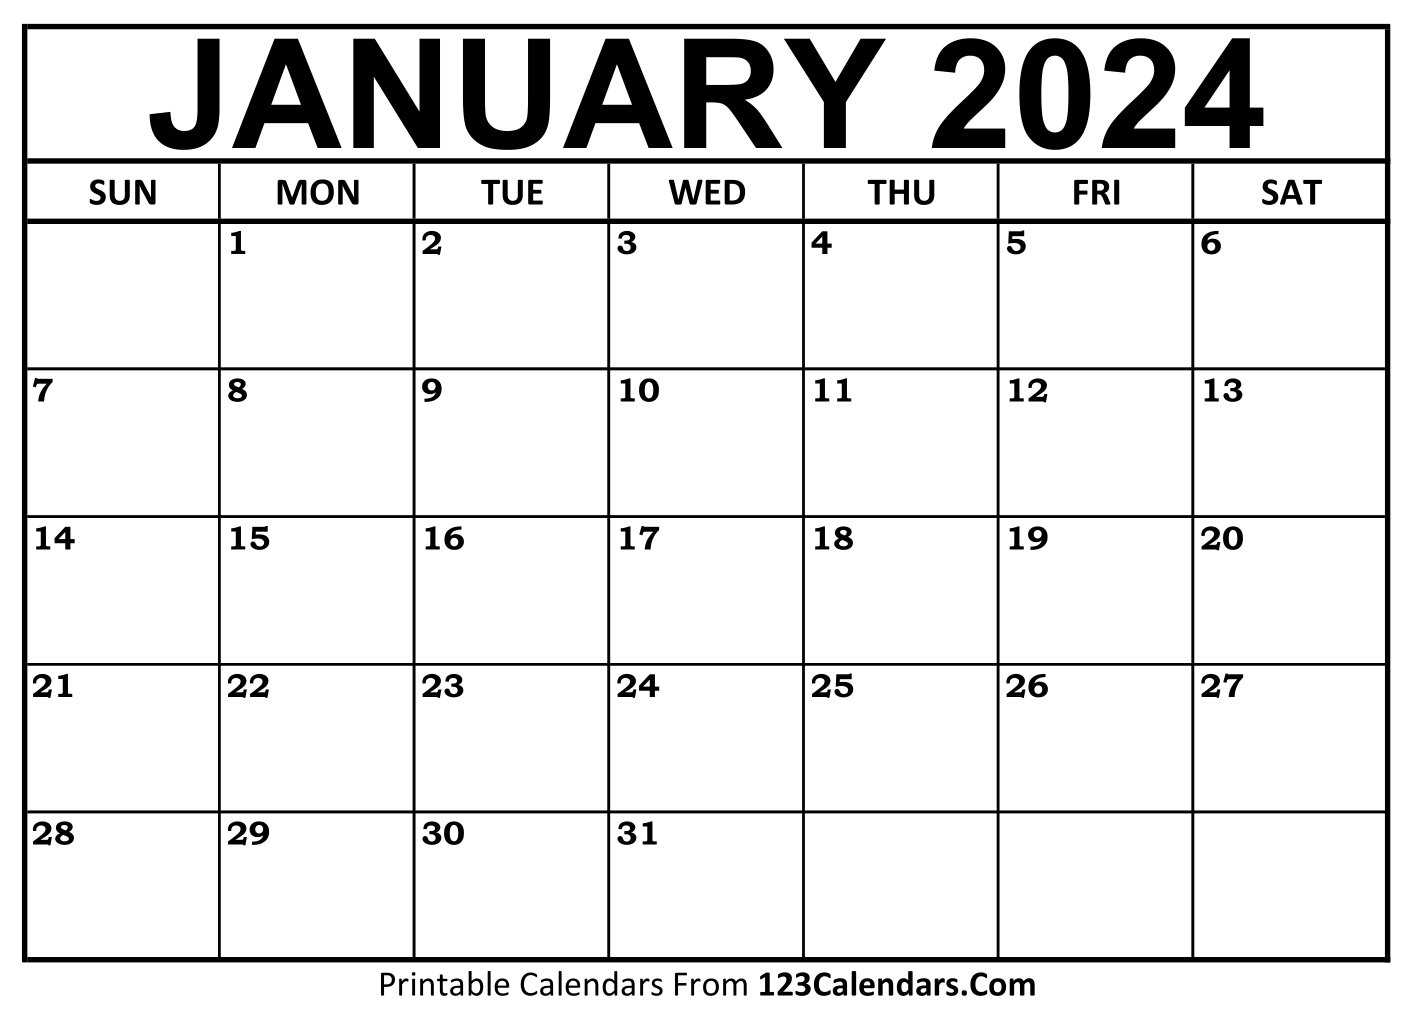 Printable January 2024 Calendar Templates - 123Calendars throughout Free Printable Calendar 2024 Wiki Calendar